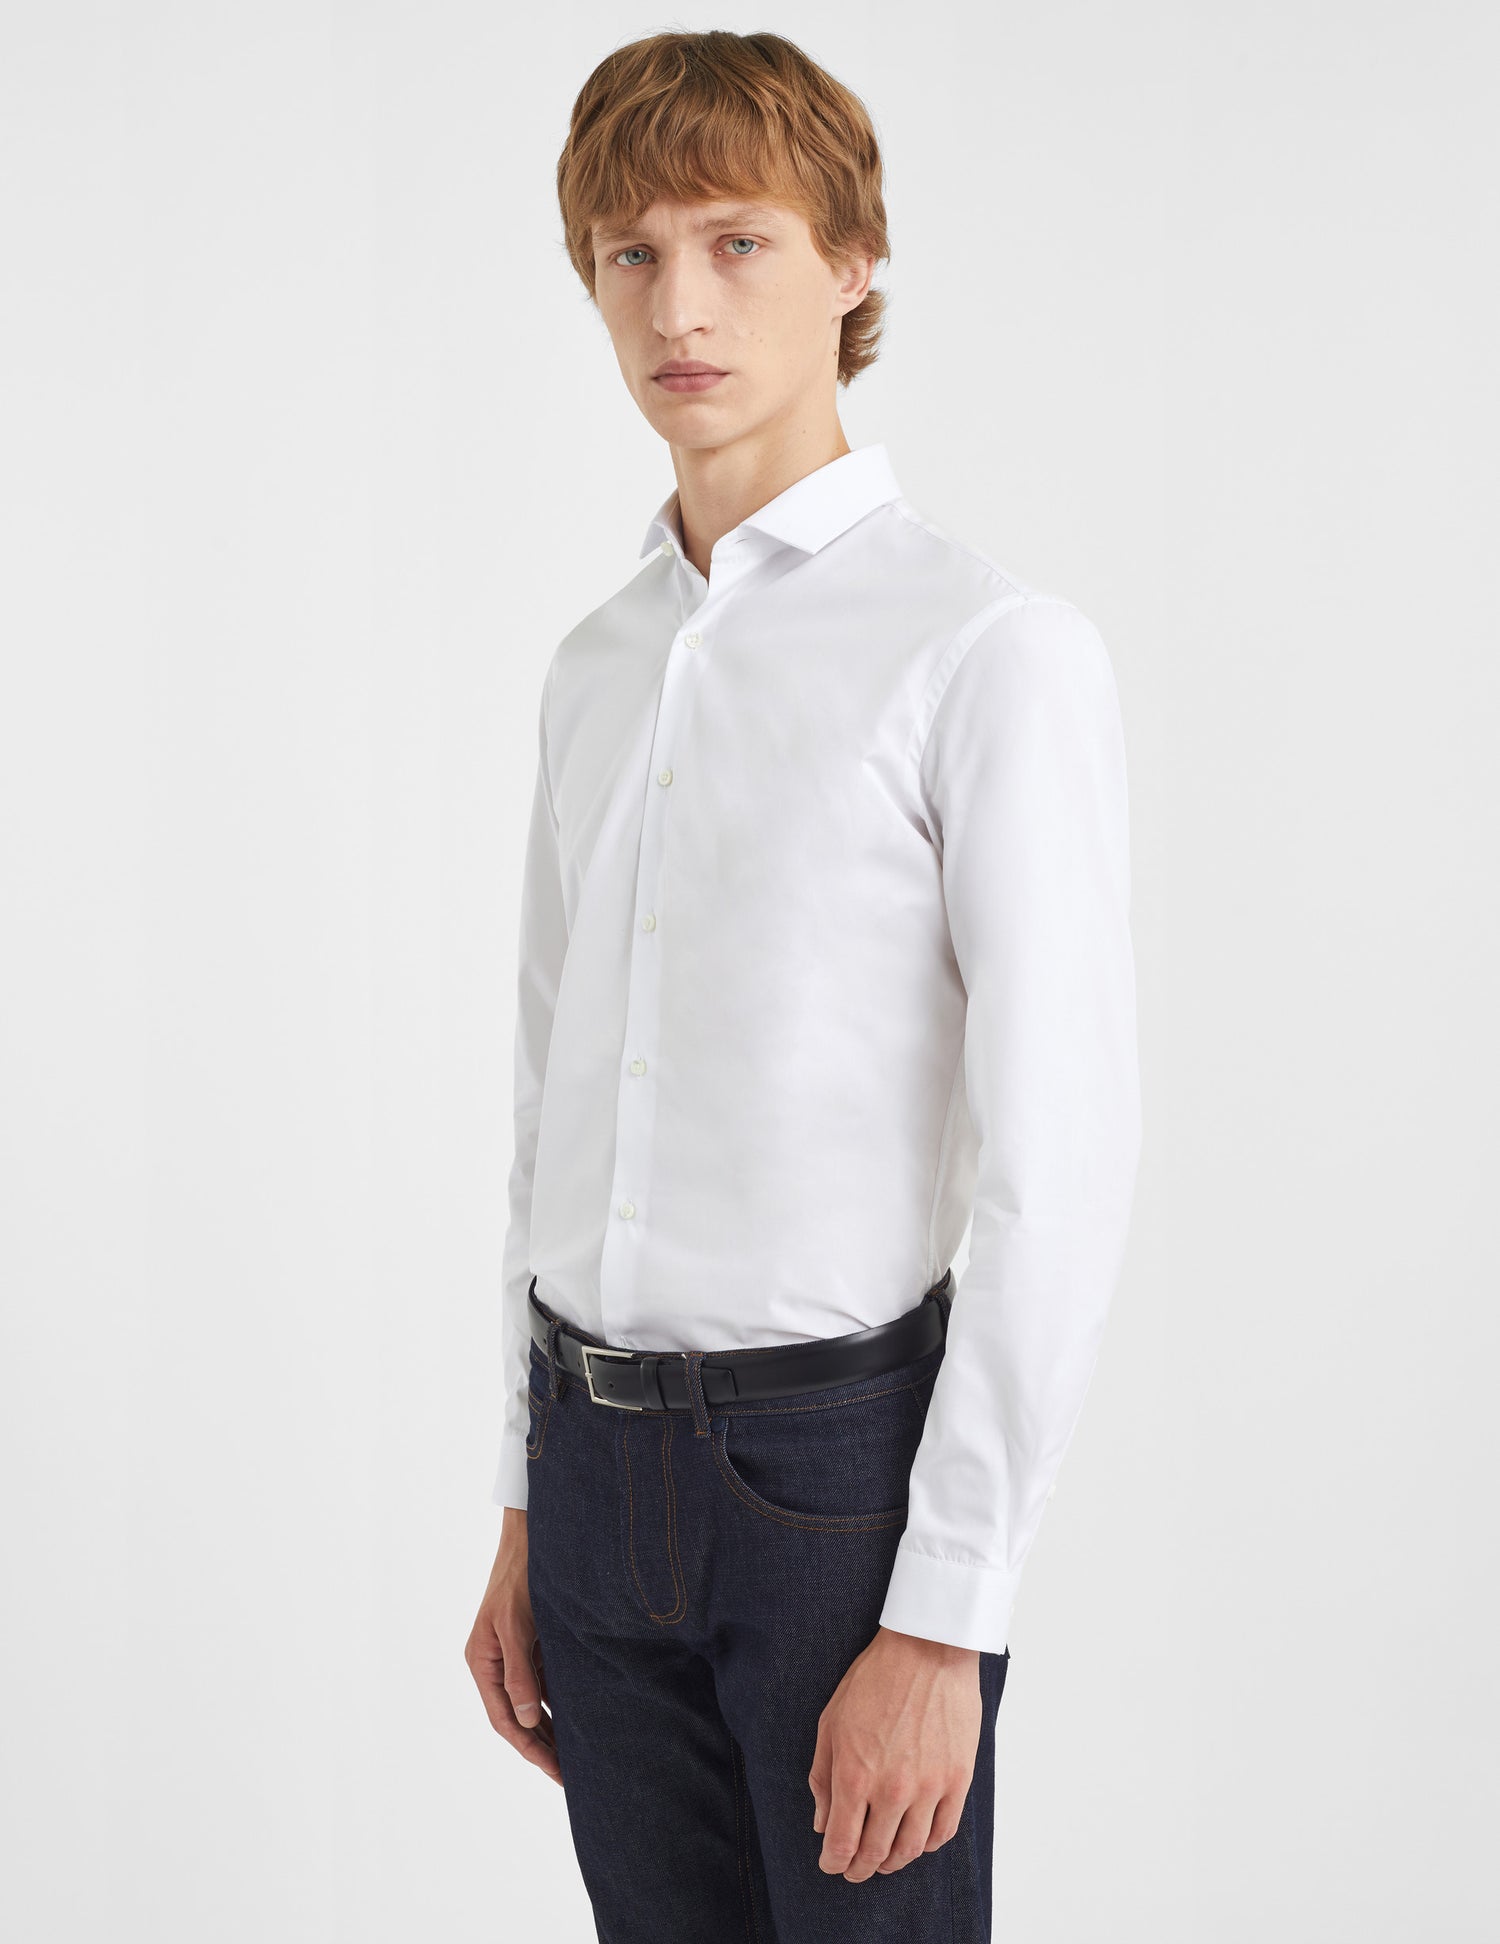 Fitted white shirt - Poplin - Thin Collar#3